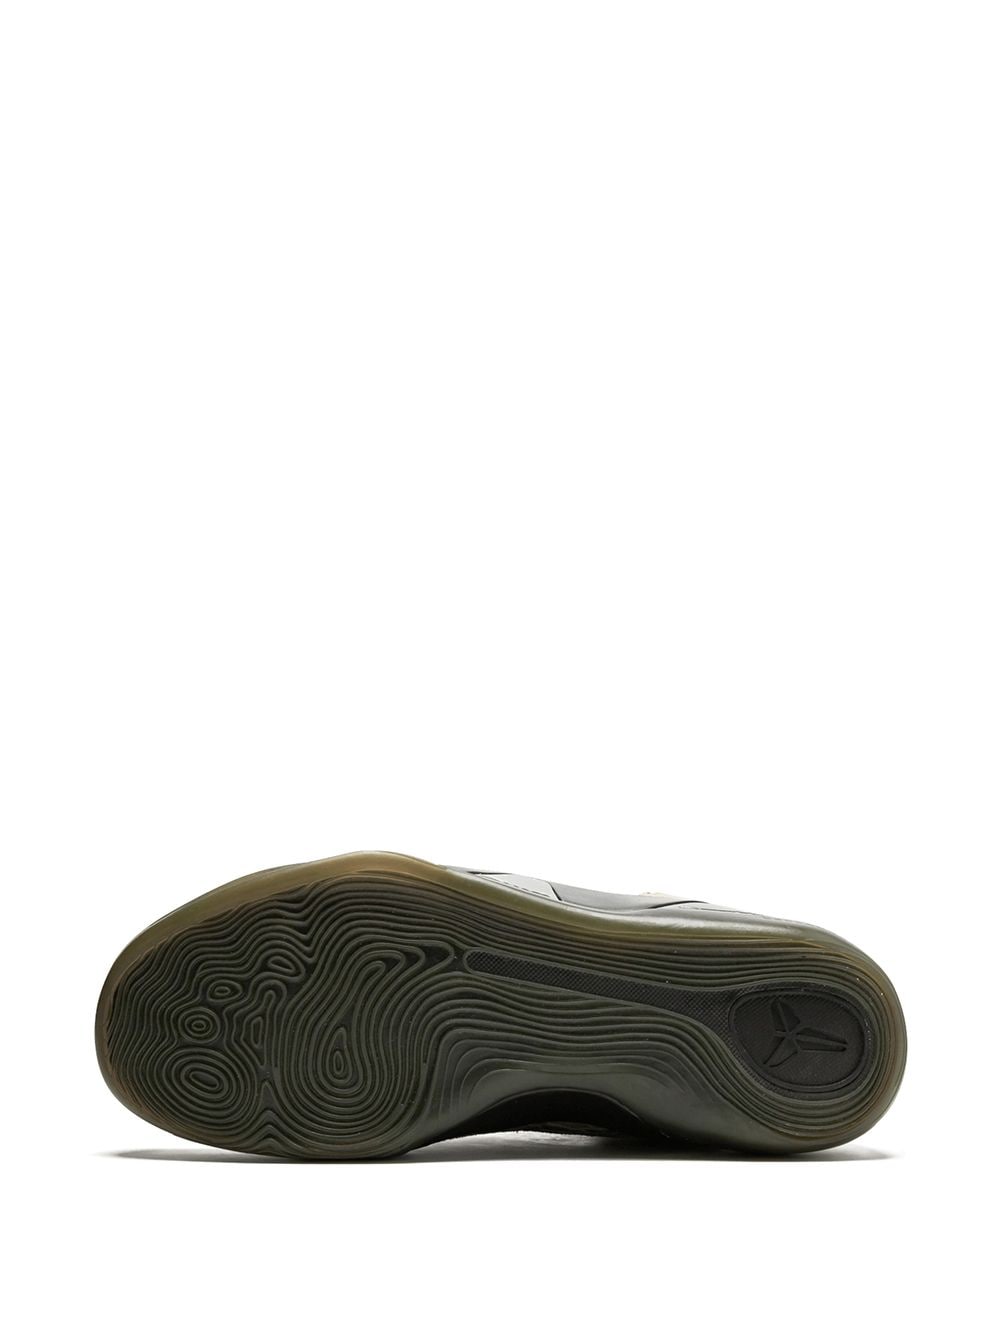 Nike Kobe 9 High EXT QS snakeskin Sneakers - Farfetch